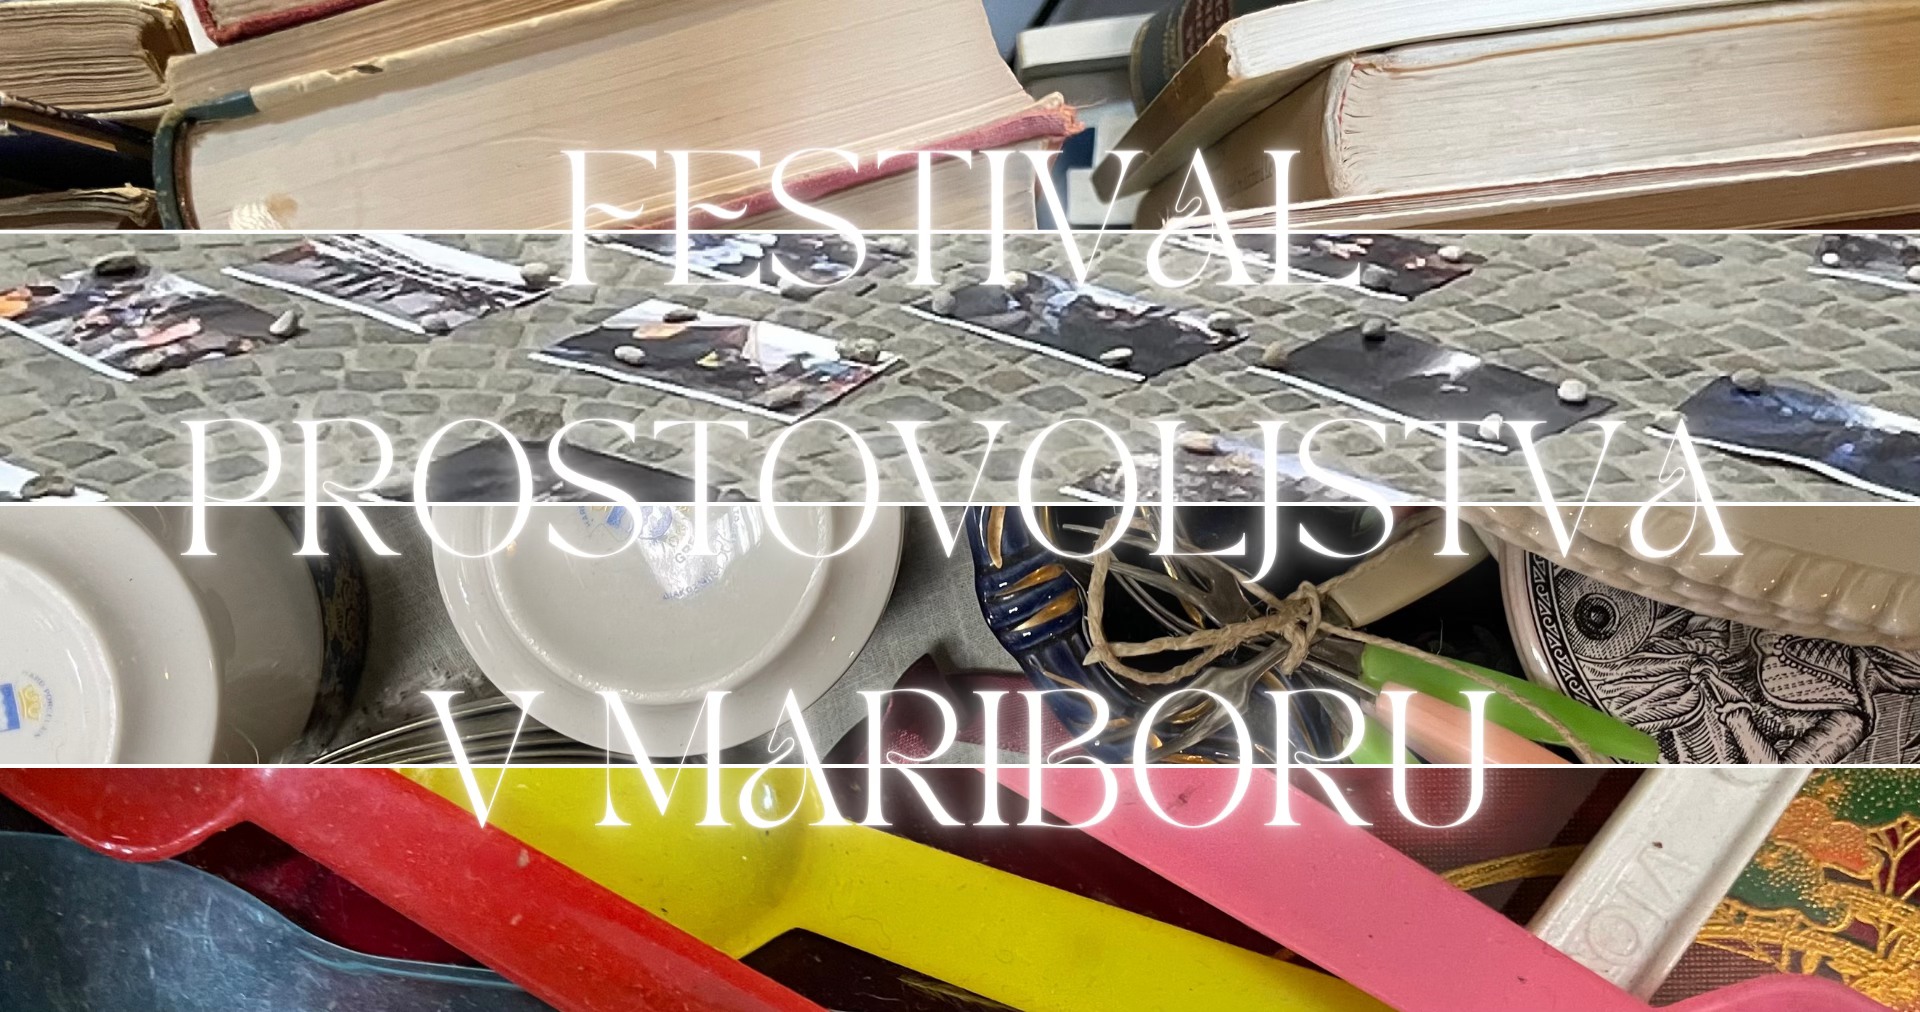 festival_prostovoljstva_v_mariboru